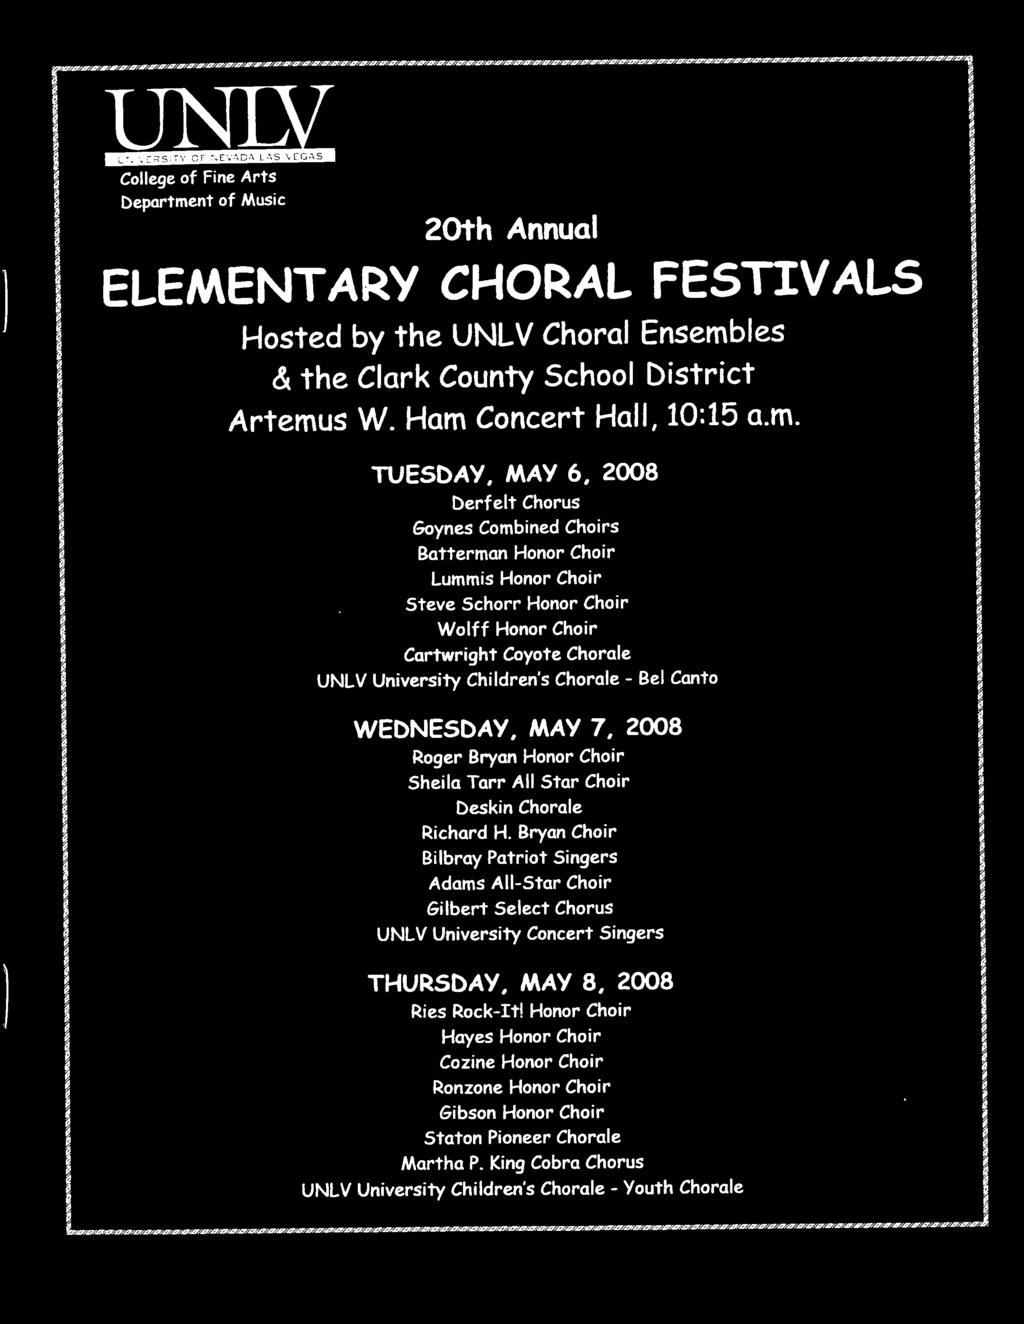 Bryan Chor ~ Blbray Patrot Sngers Adams All-Star Chor ~ 1 Glbert Select Chorus 1 UNLV Unversty Concert Sngers ~ THURSDAY. MAY 8, 2008 1 t Res Rock-t!